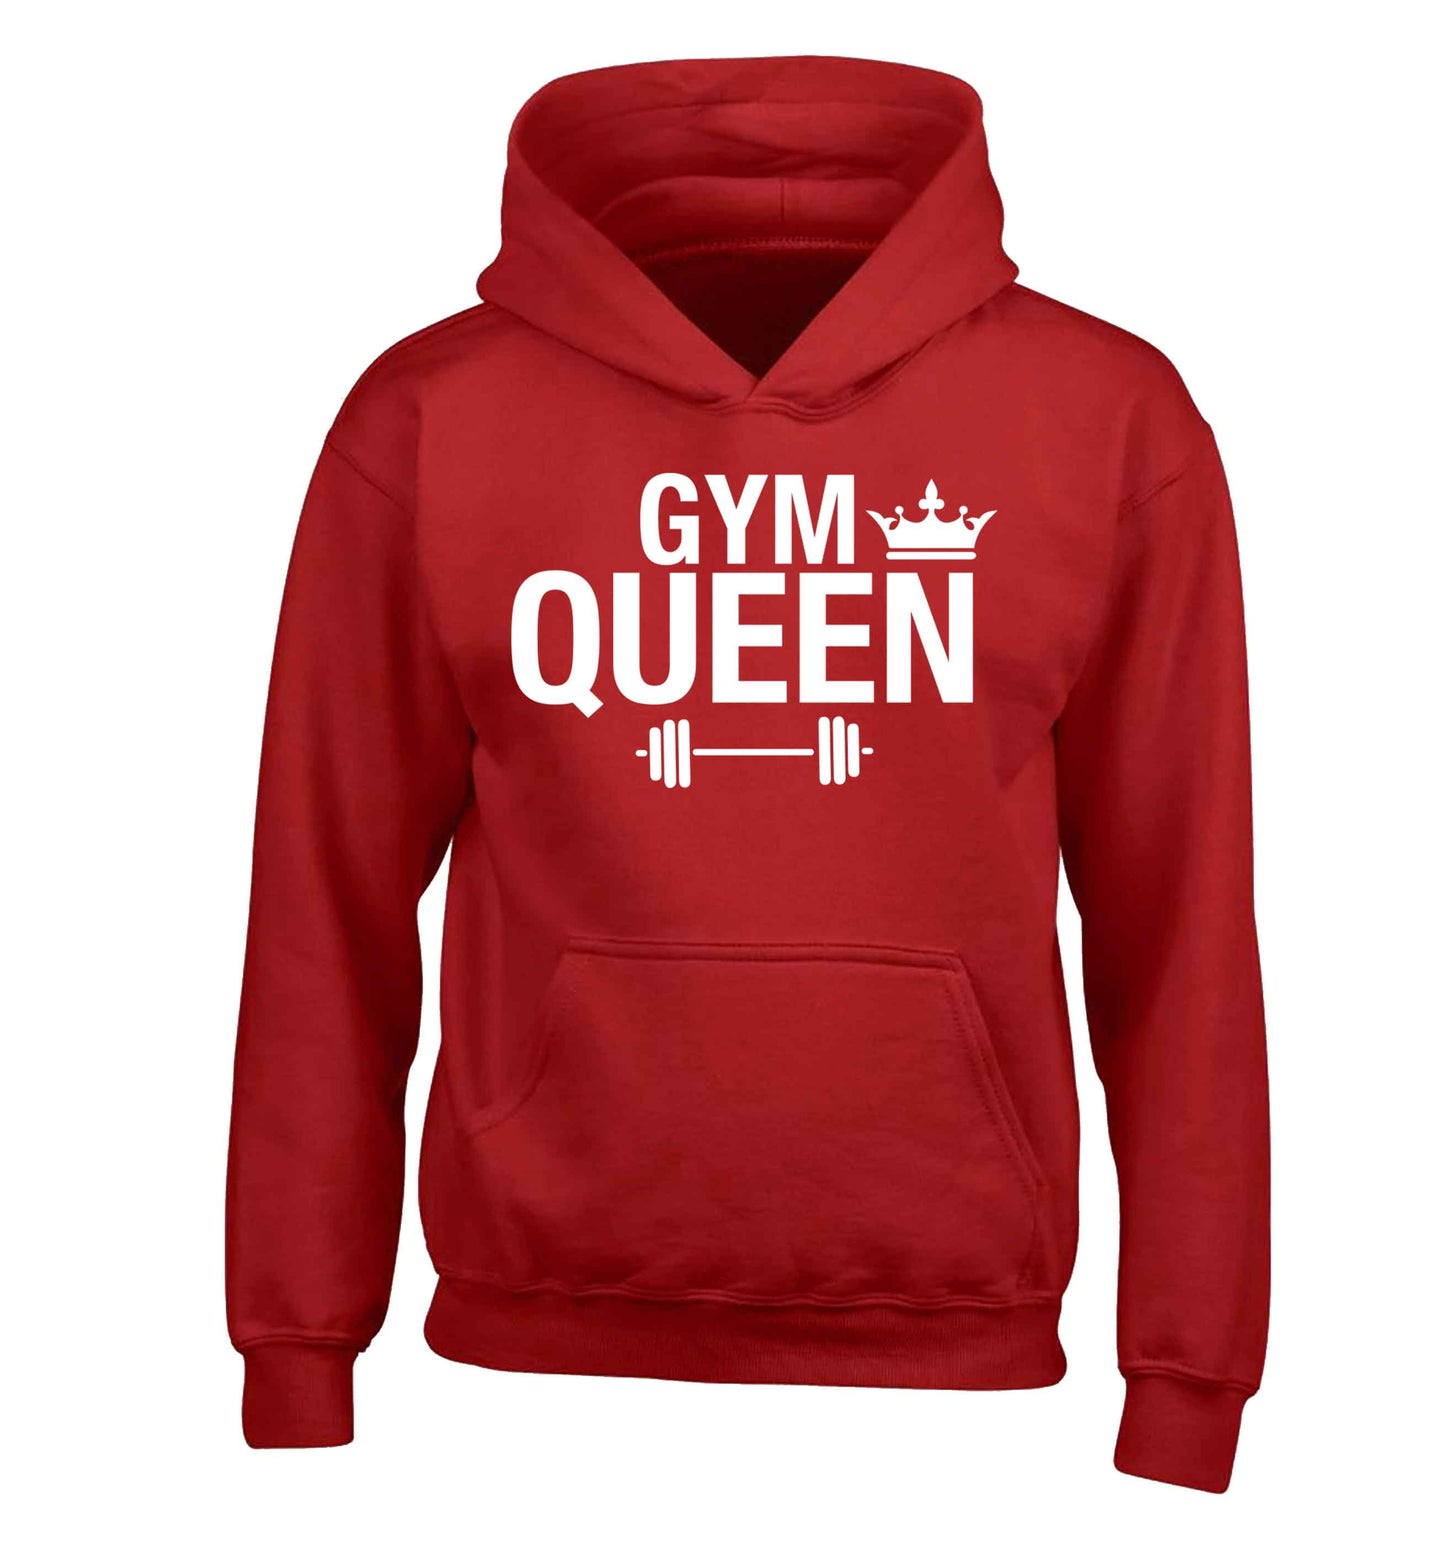 Gym queen children's red hoodie 12-13 Years